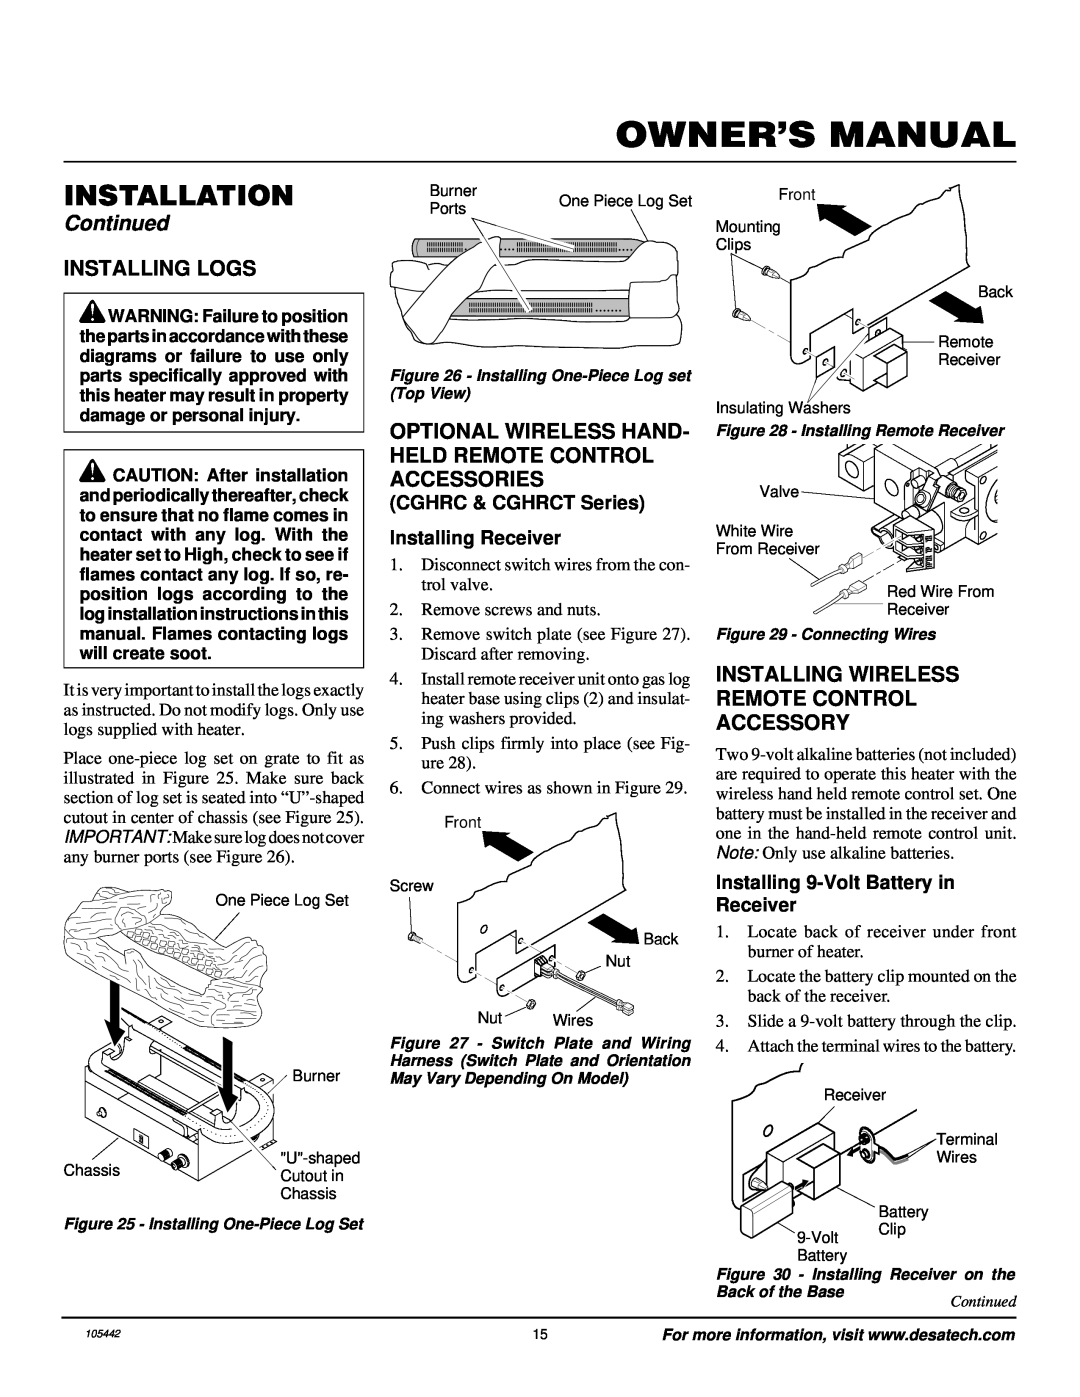 Desa CF26PR installation manual Installing Logs, Installing Wireless Remote Control Accessory, Installation, Continued 